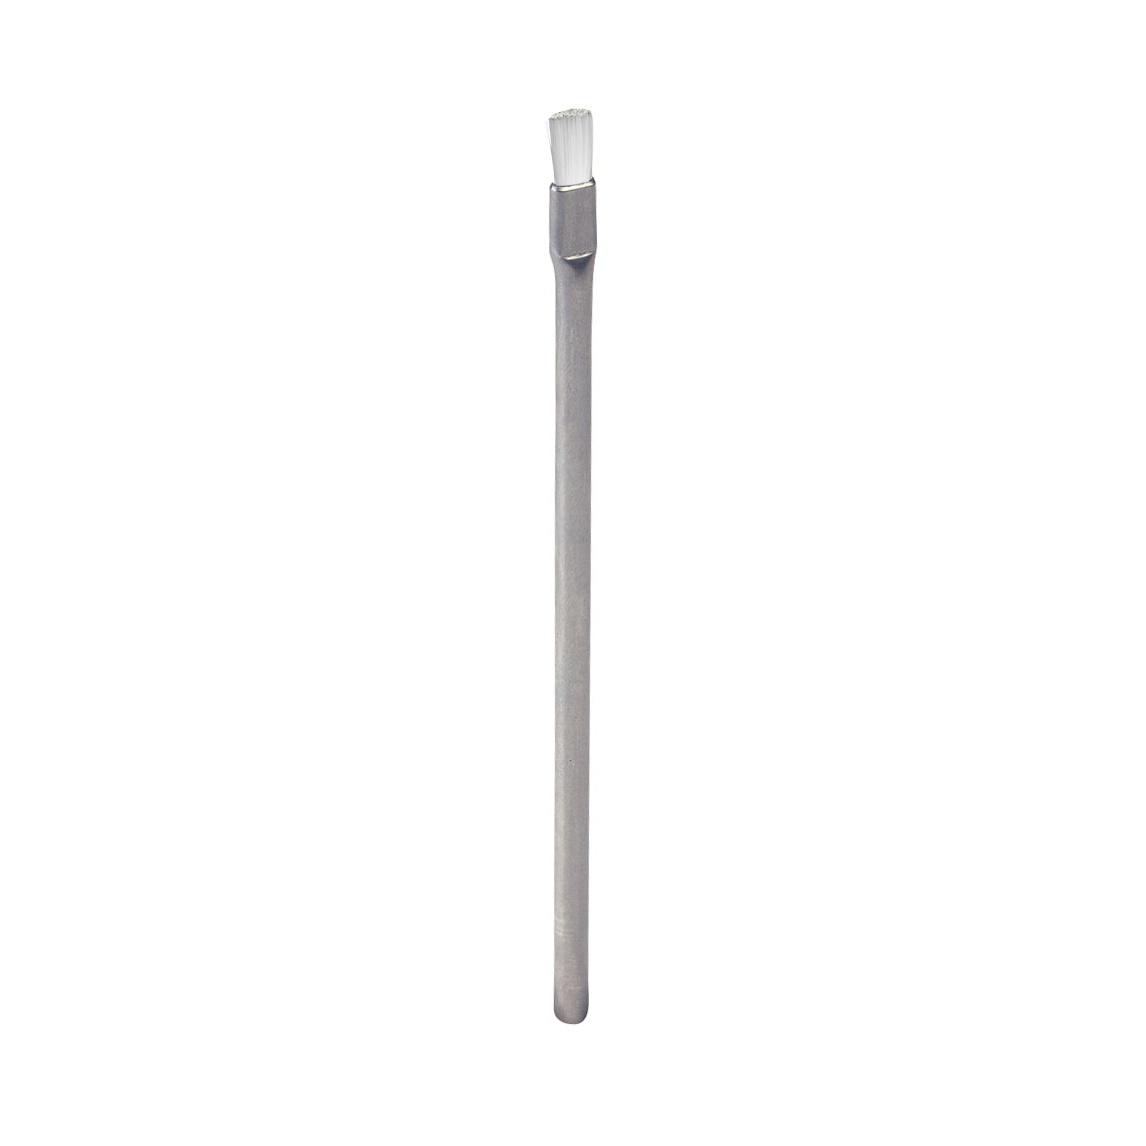 Applicator Brush — 0.006" PEEK Bristle / 3/16" Diameter Stainless Steel Tube Handle 1